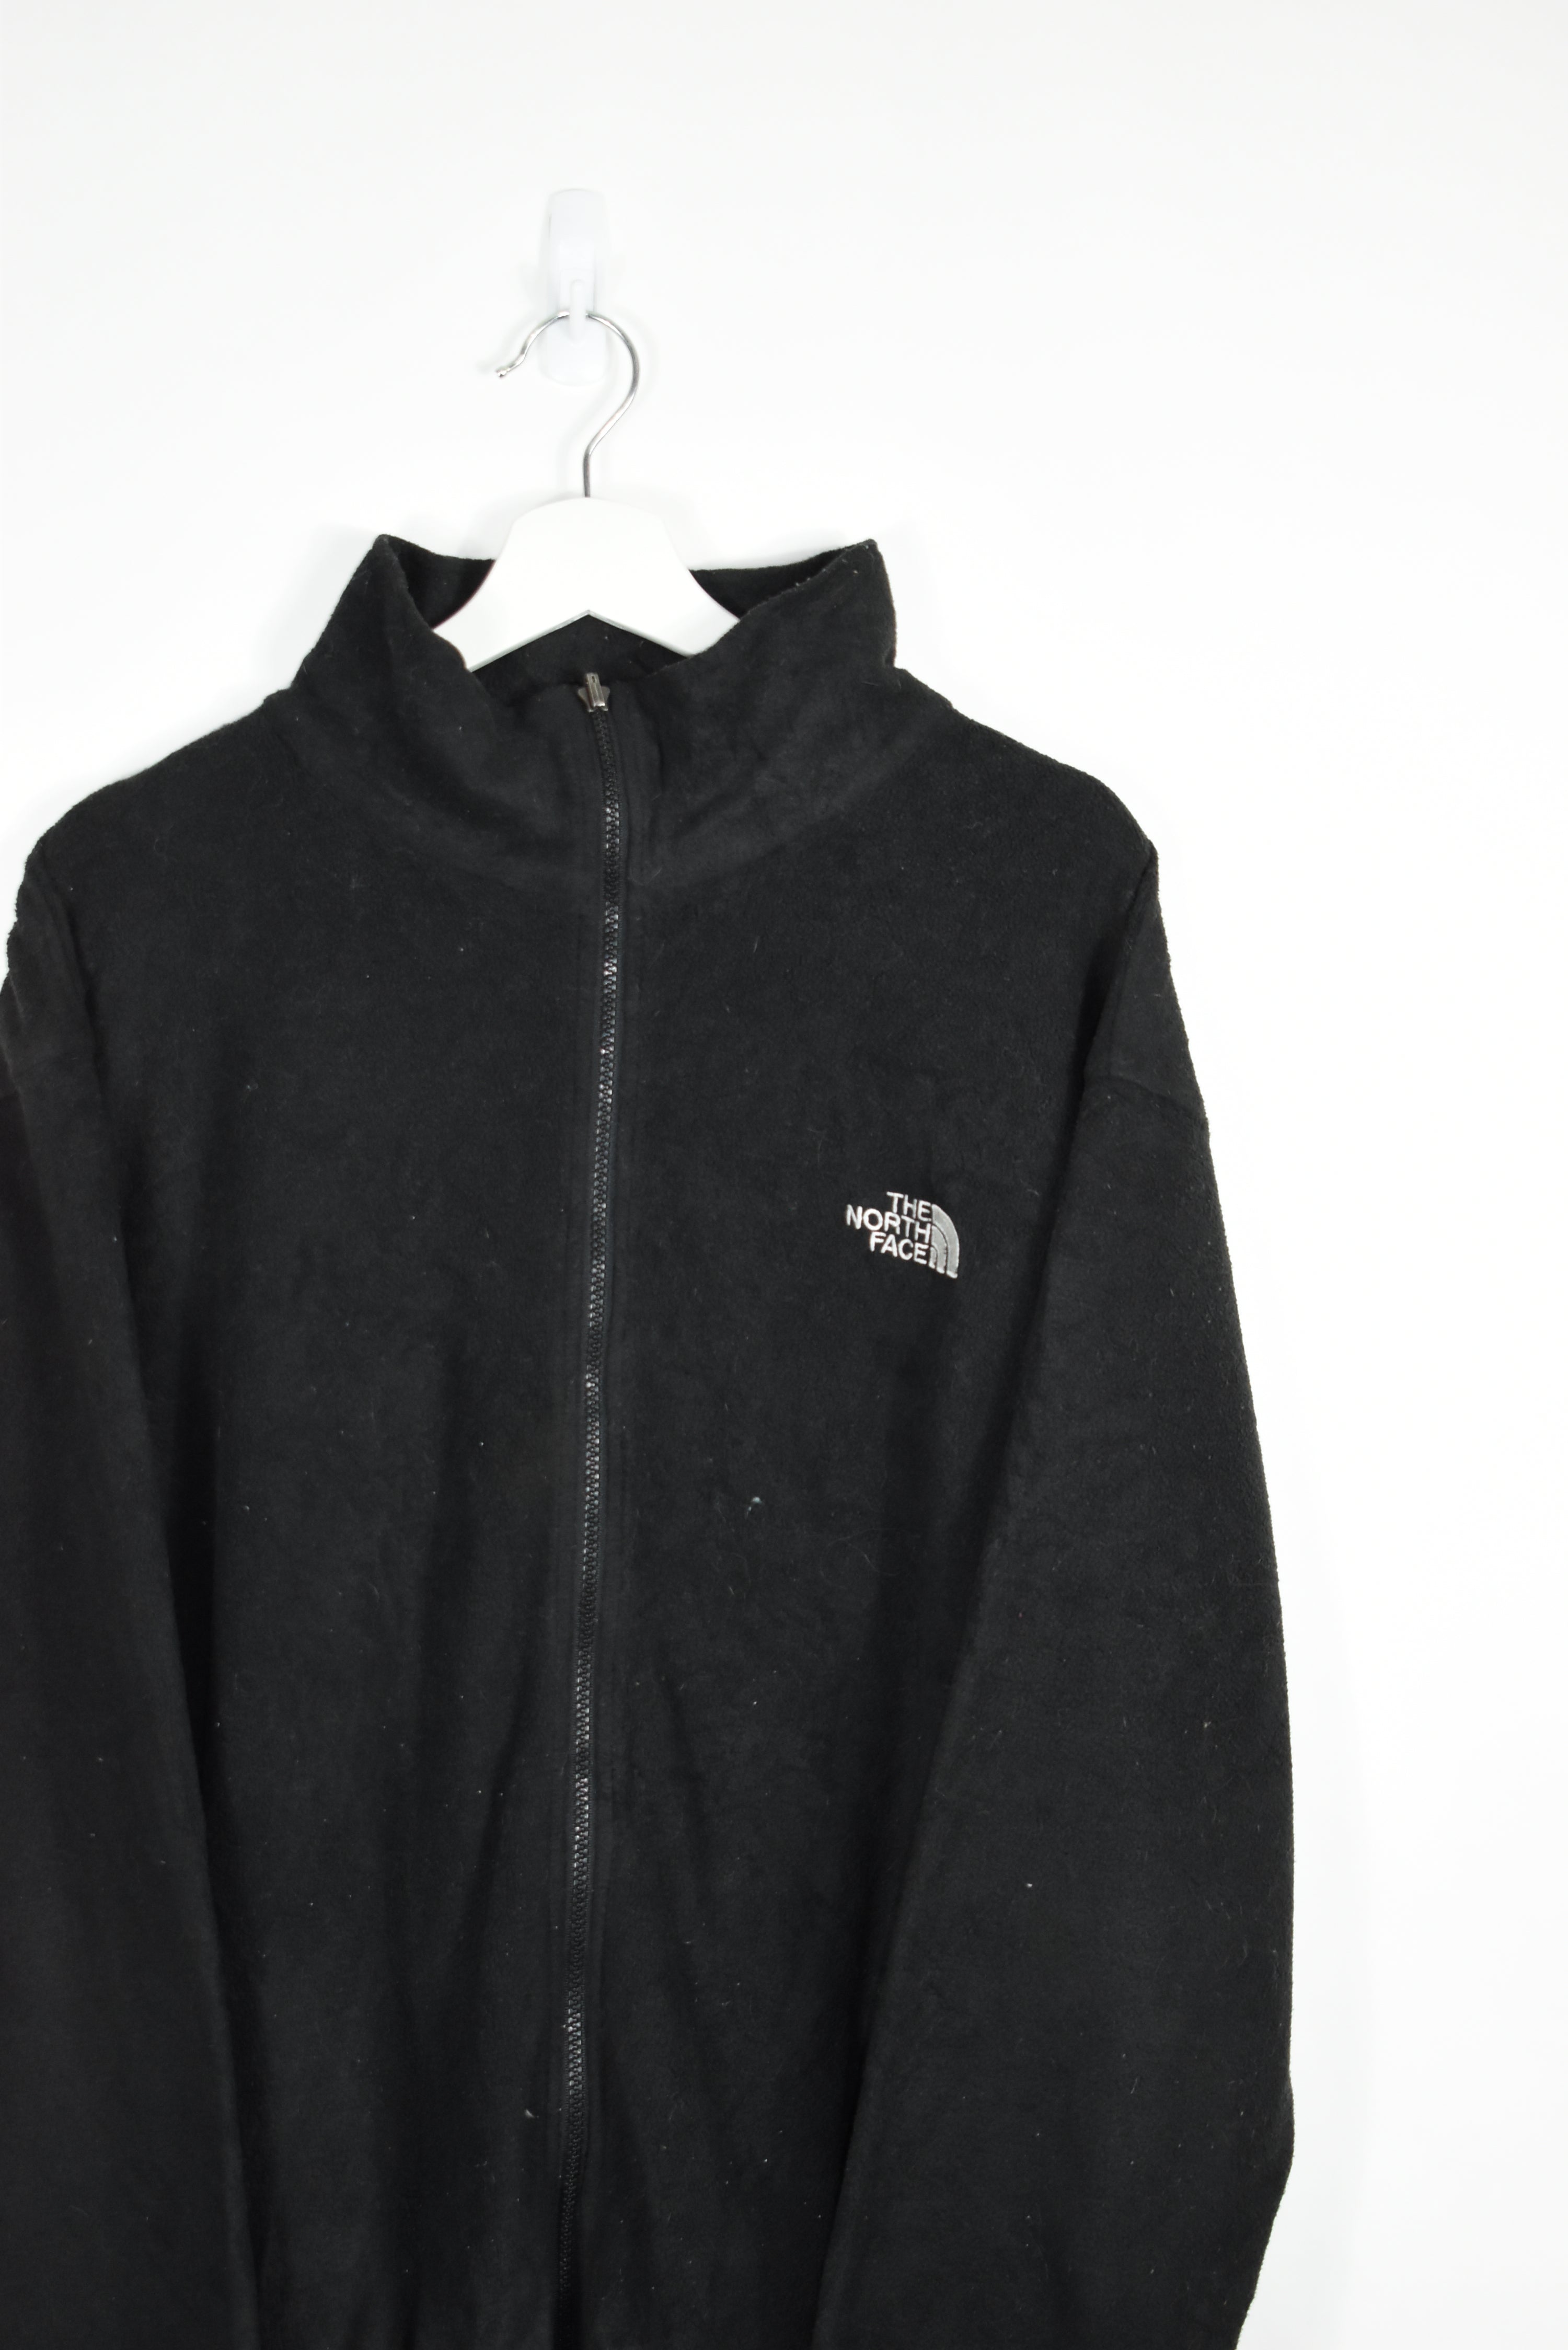 Vintage North Face Fleece Jacket XLARGE